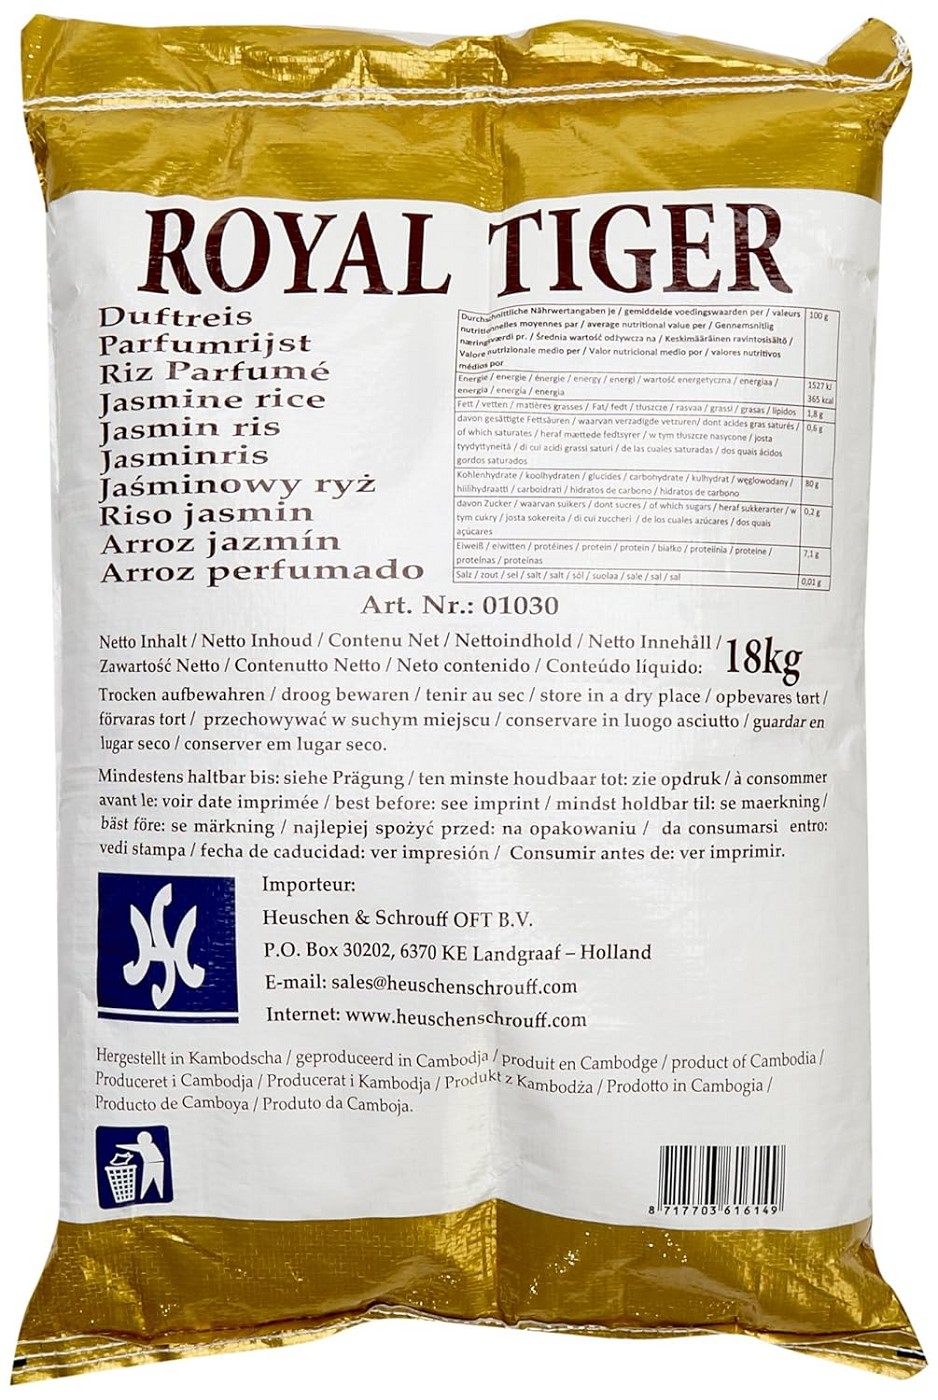 Royal Tiger Jasmin Reis 18kg